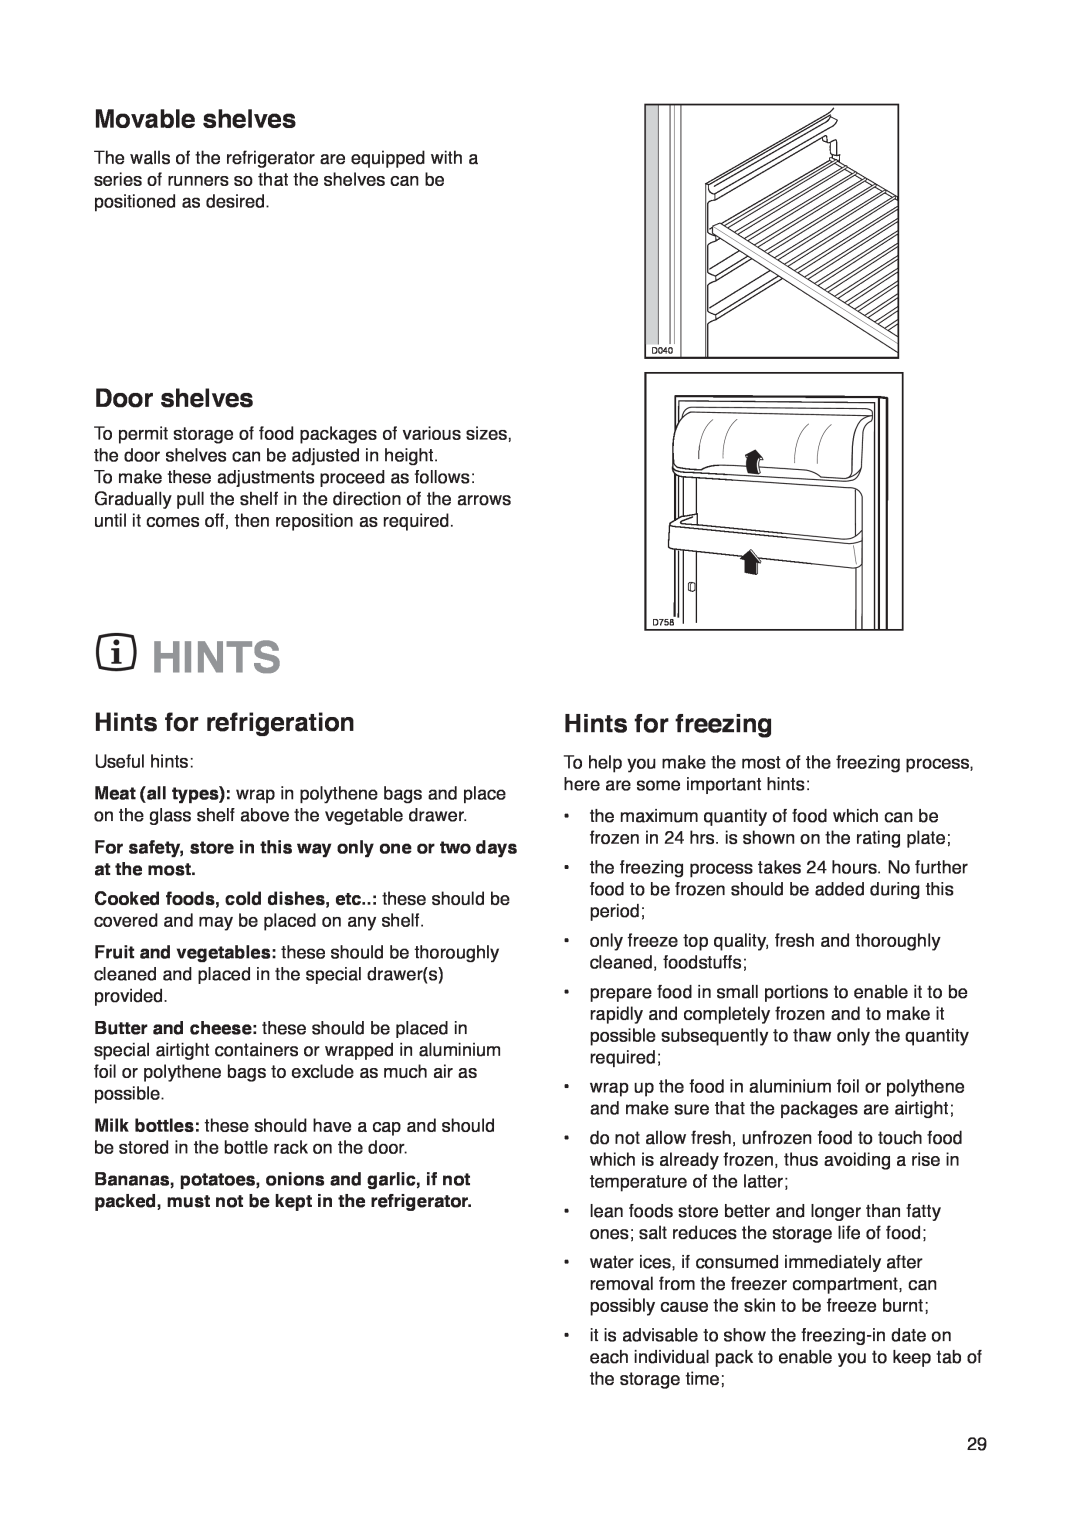 Zanussi ZD 19/4 manual Movable shelves, Door shelves, Hints for refrigeration, Hints for freezing 